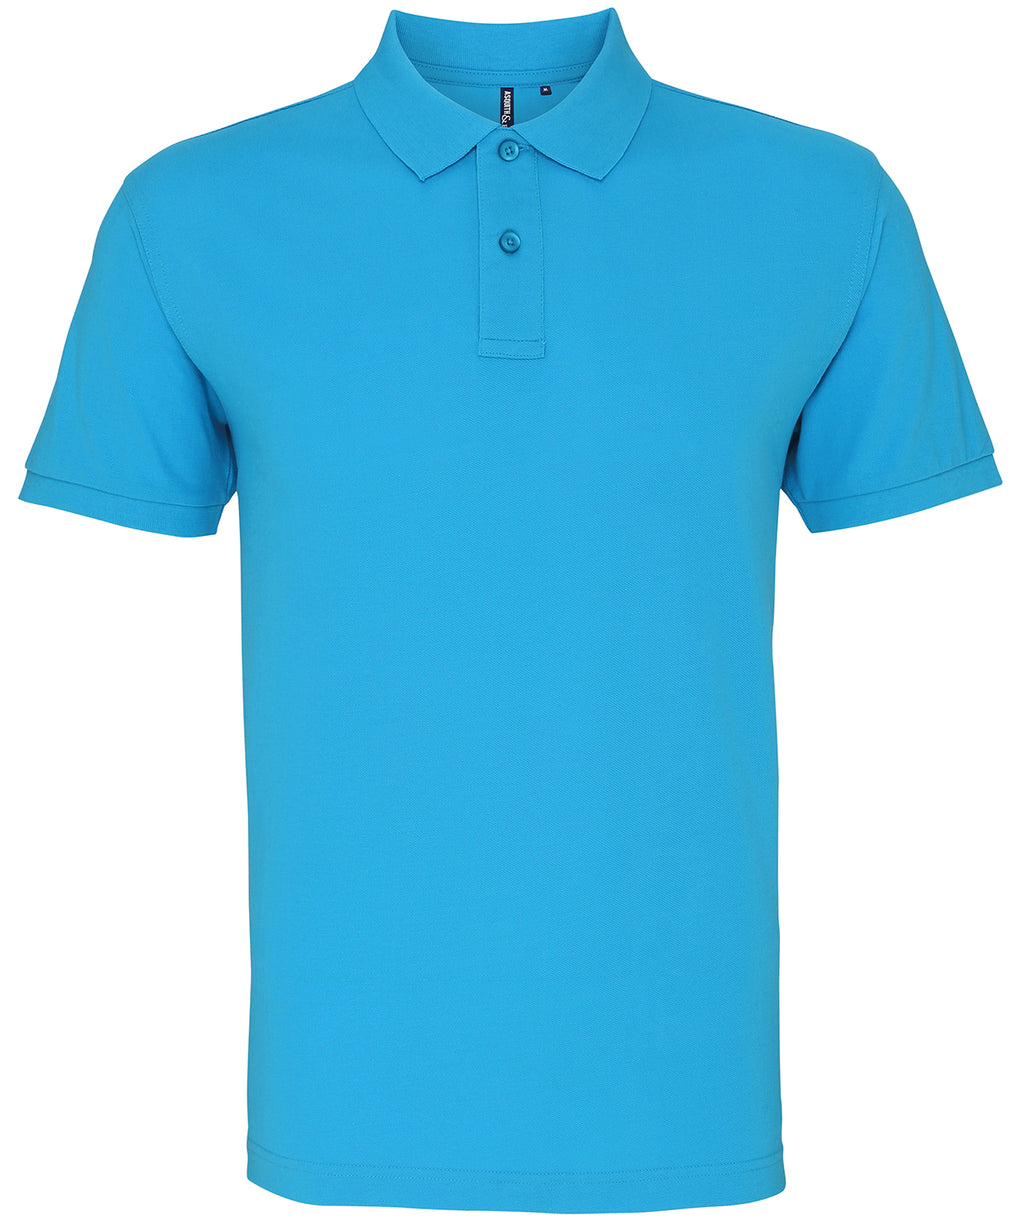 Mens Plain Short Sleeve Polo Shirt - Turquoise